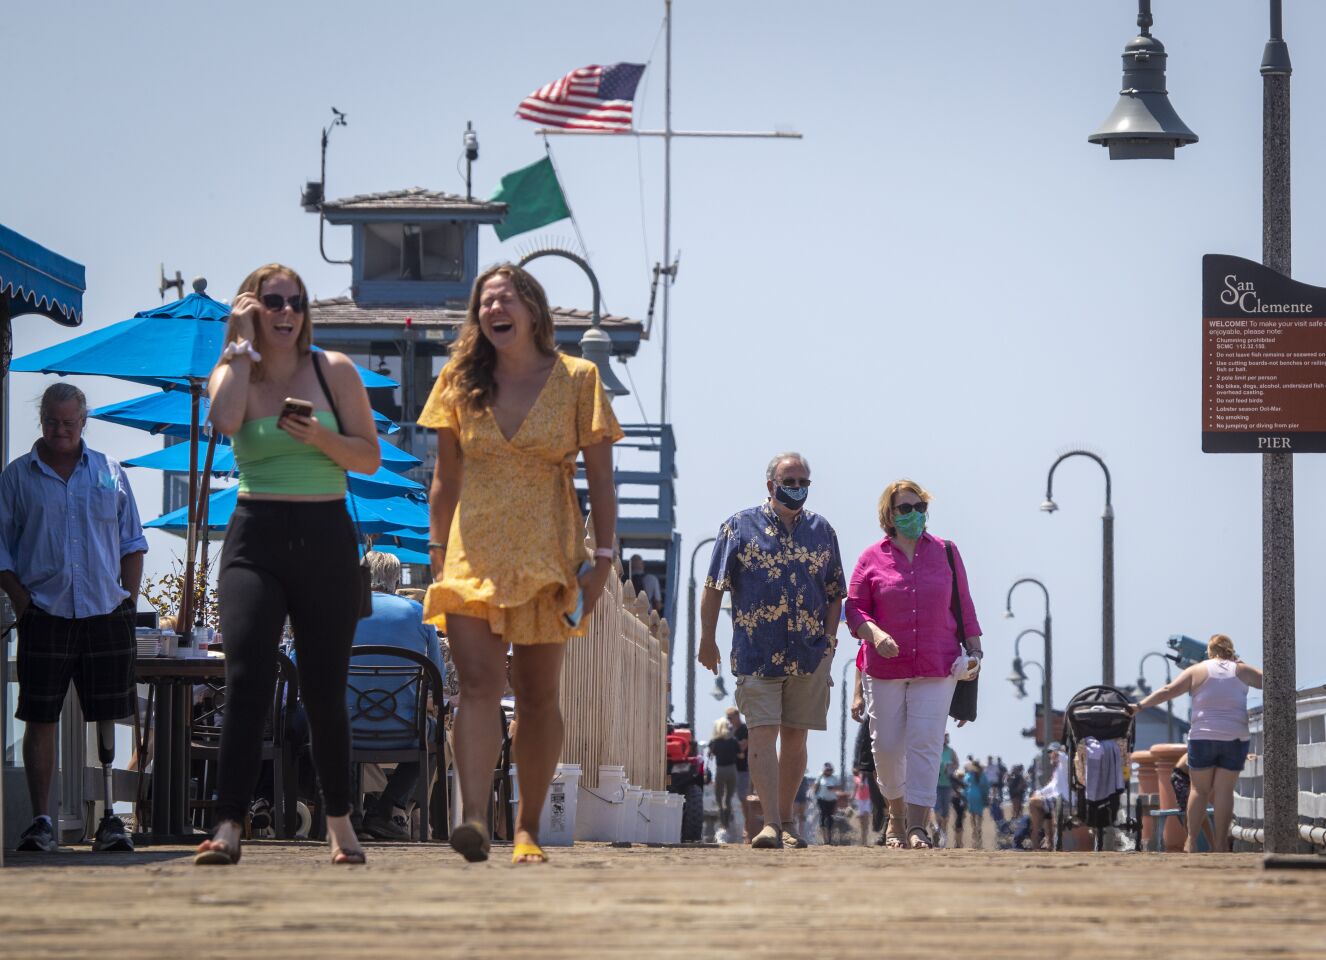 People walk on the San Clemente pier